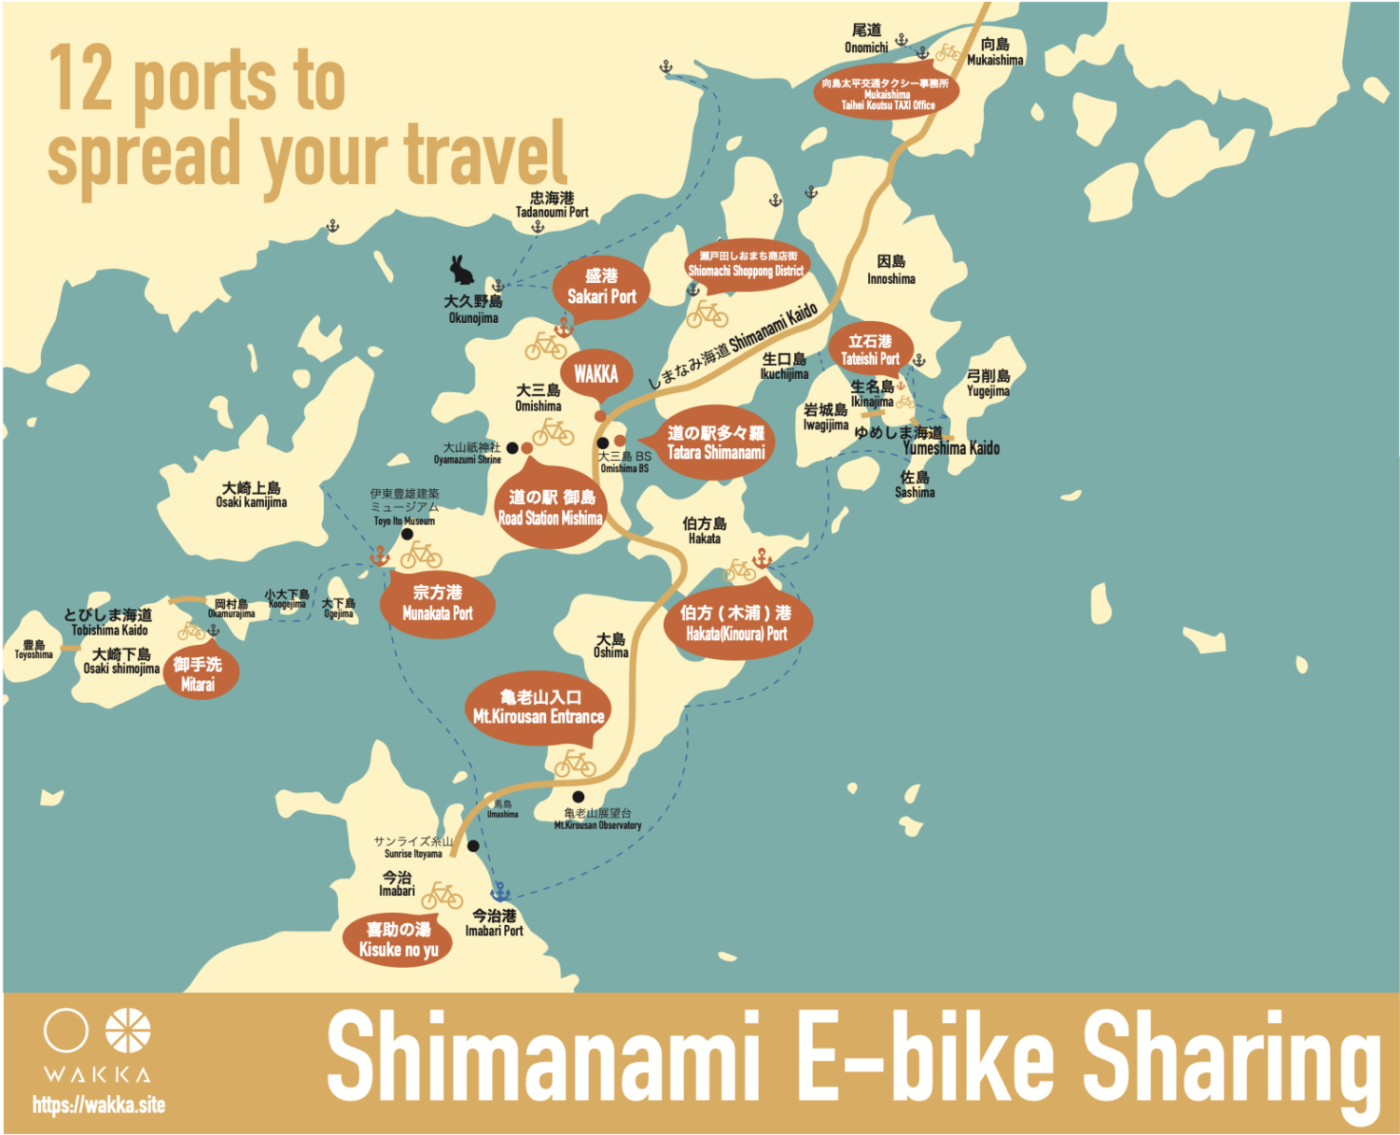 Shimanami Shared Bikes